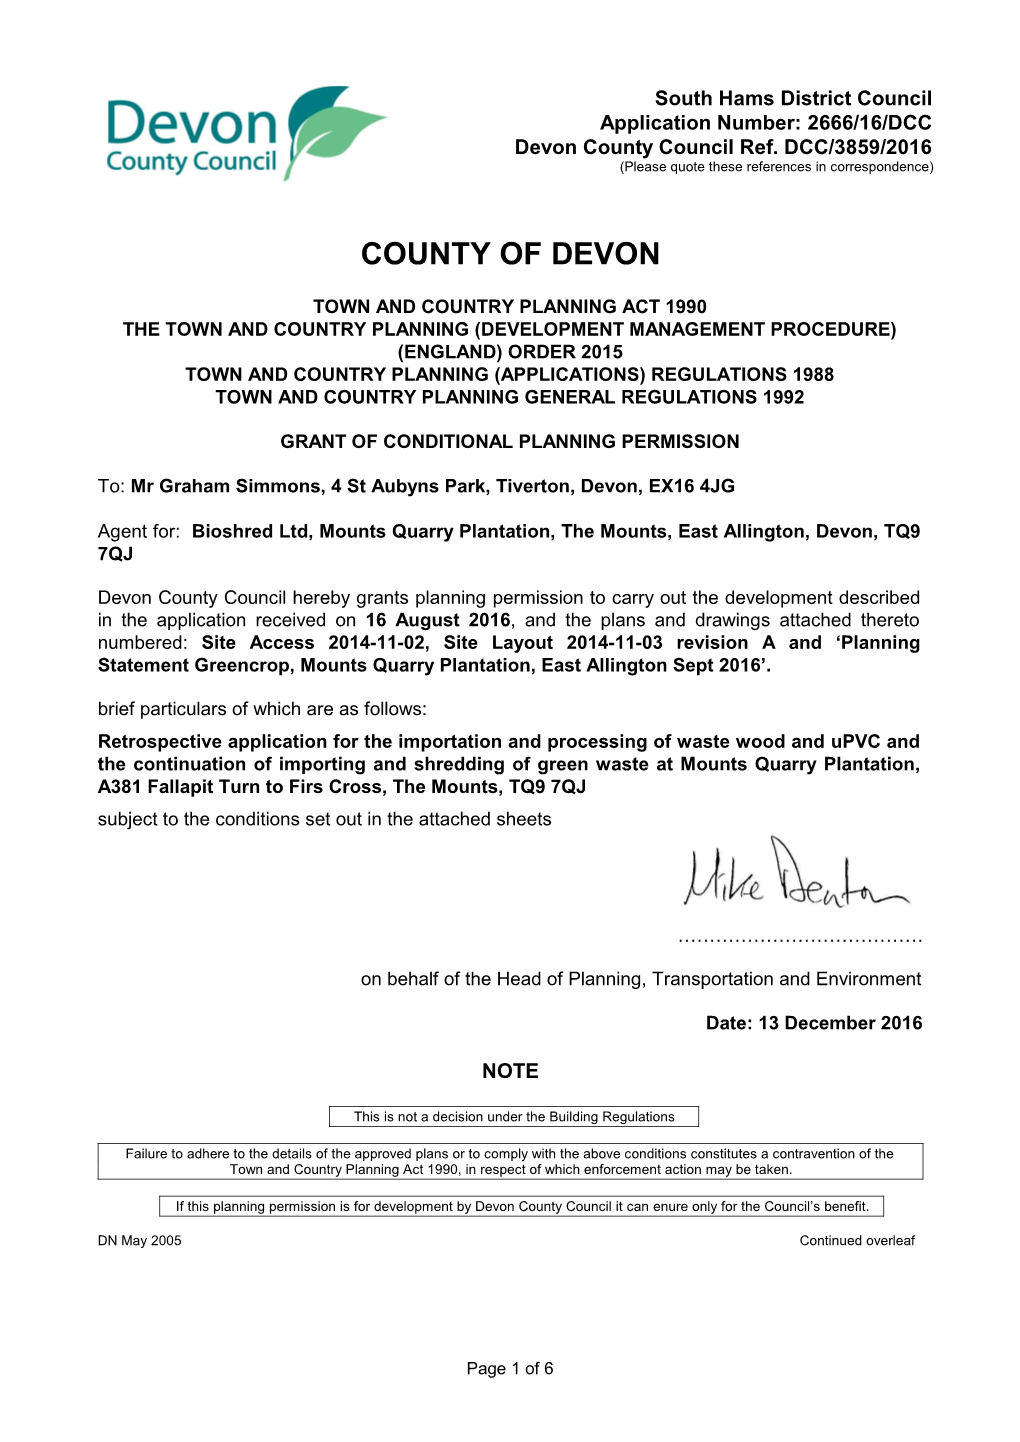 County of Devon